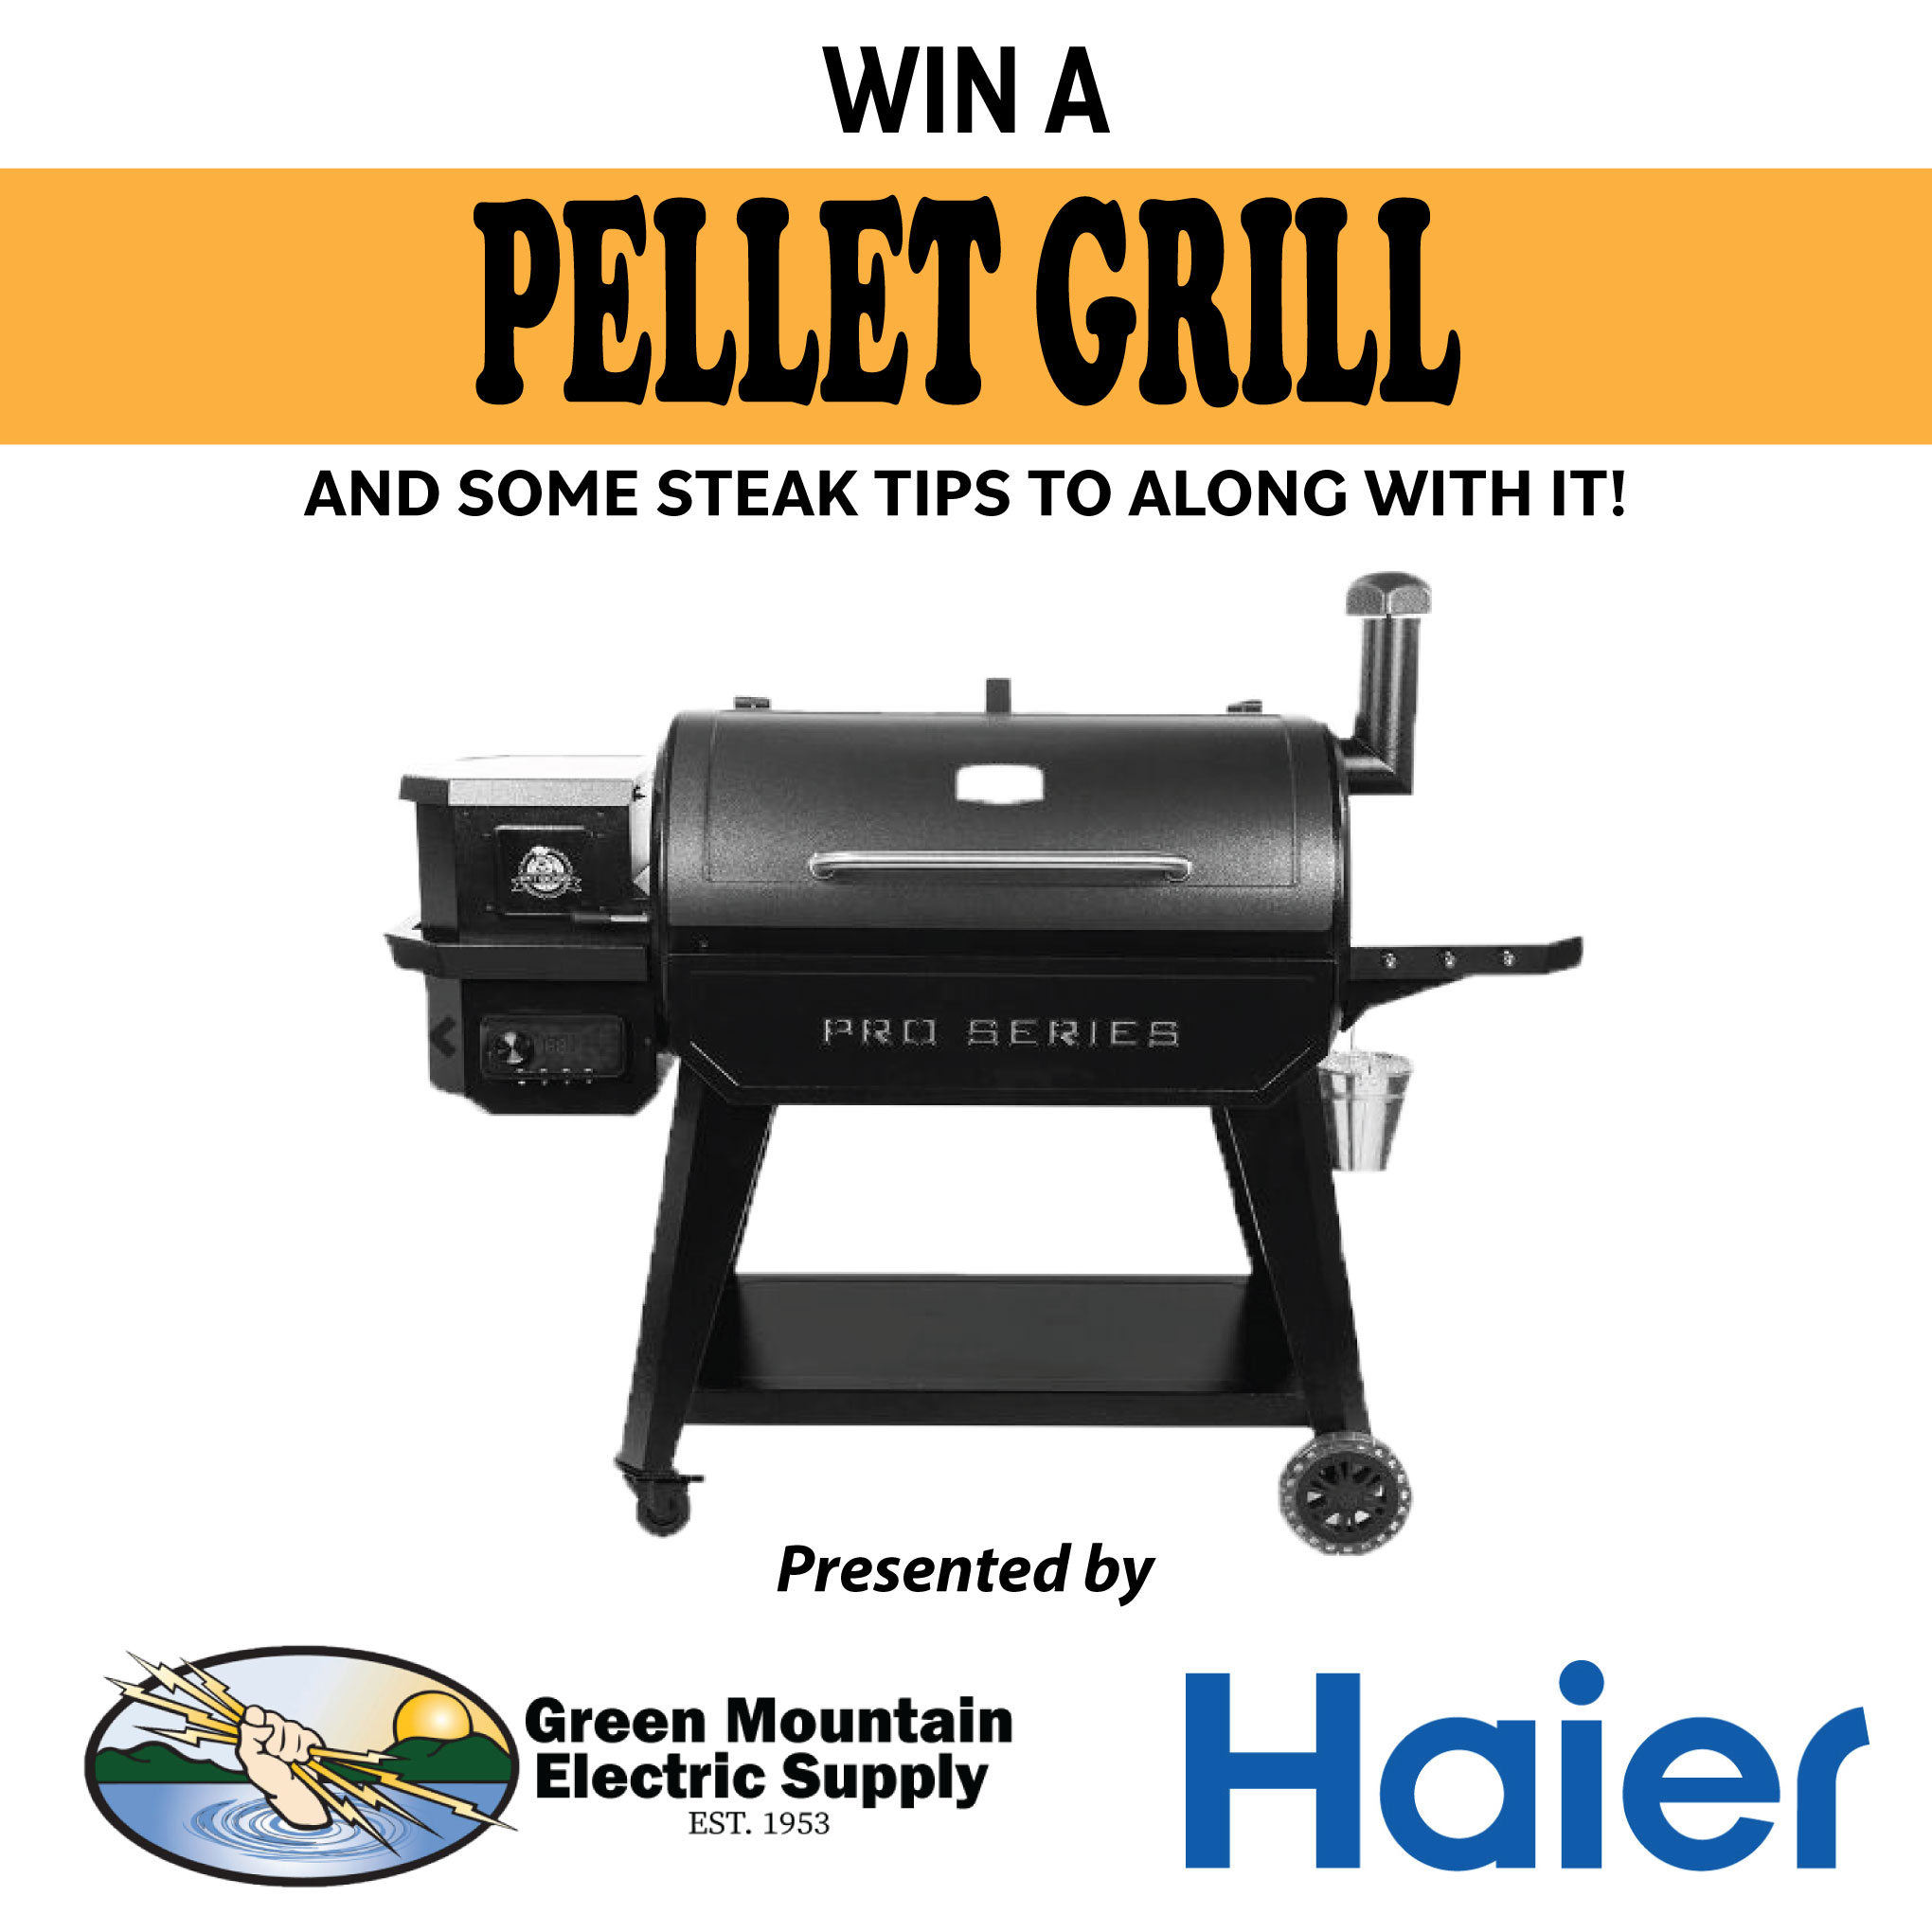 Win a Pellet Grill!